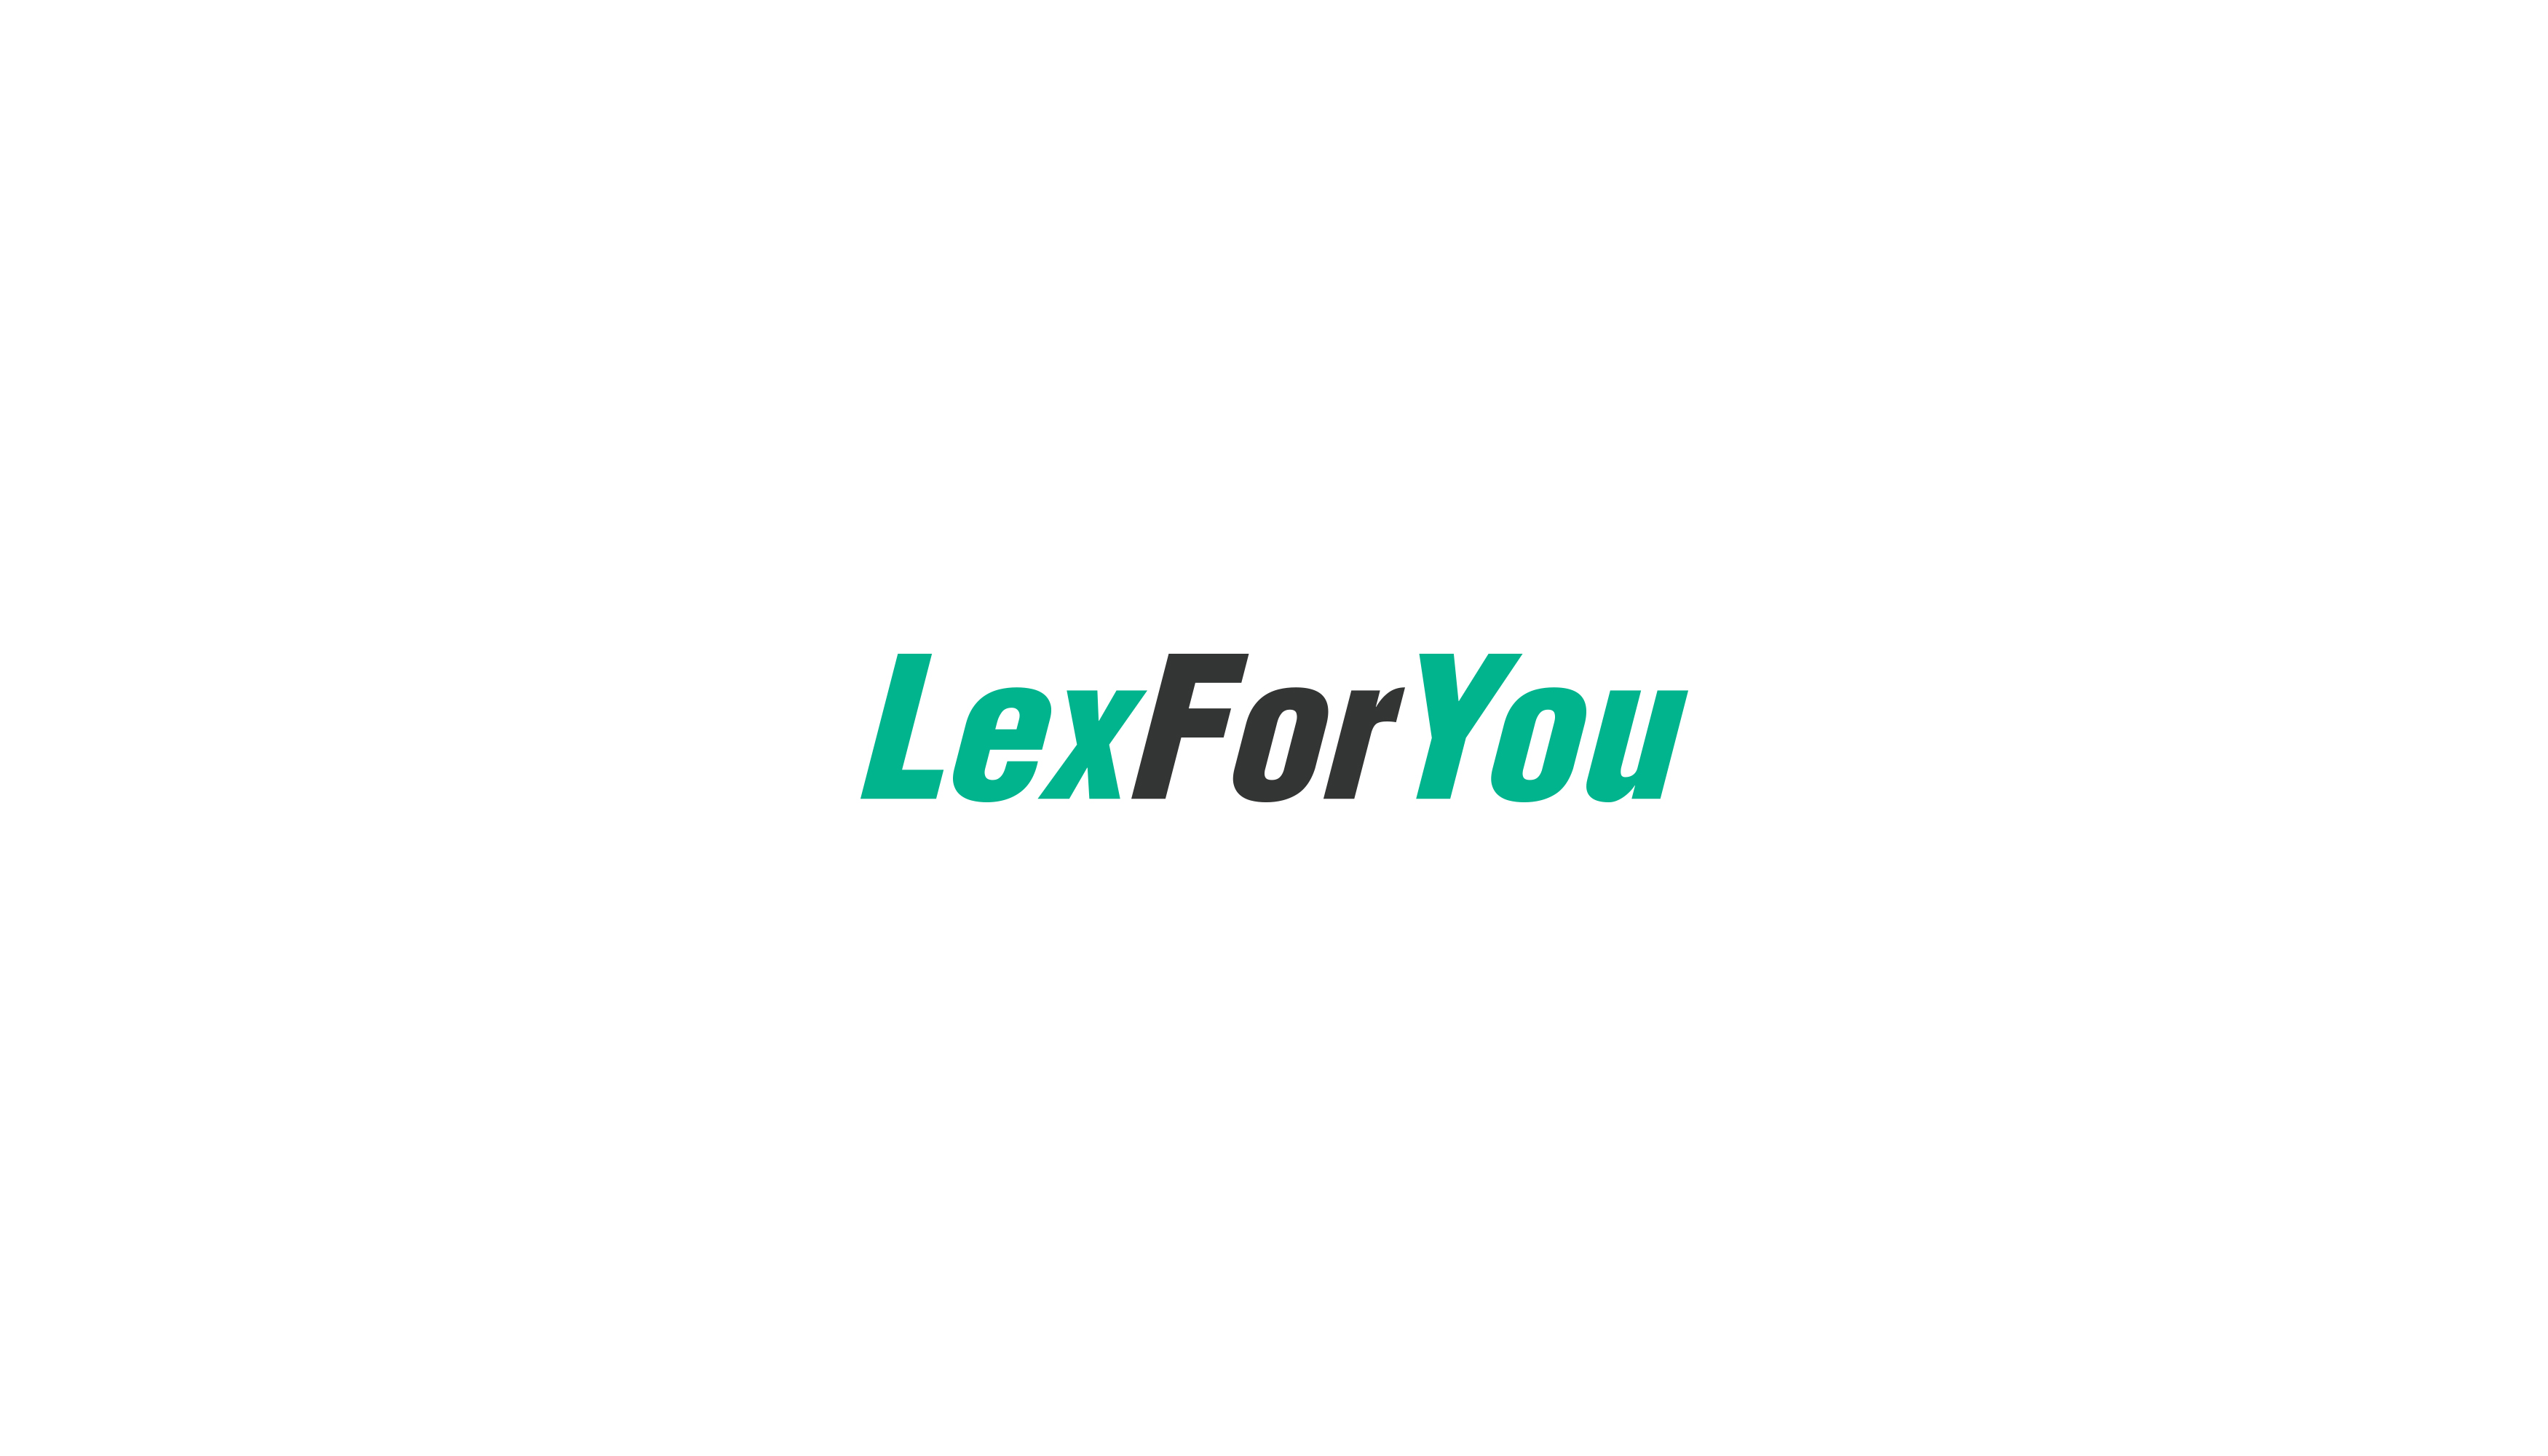 LexForYou Design #4